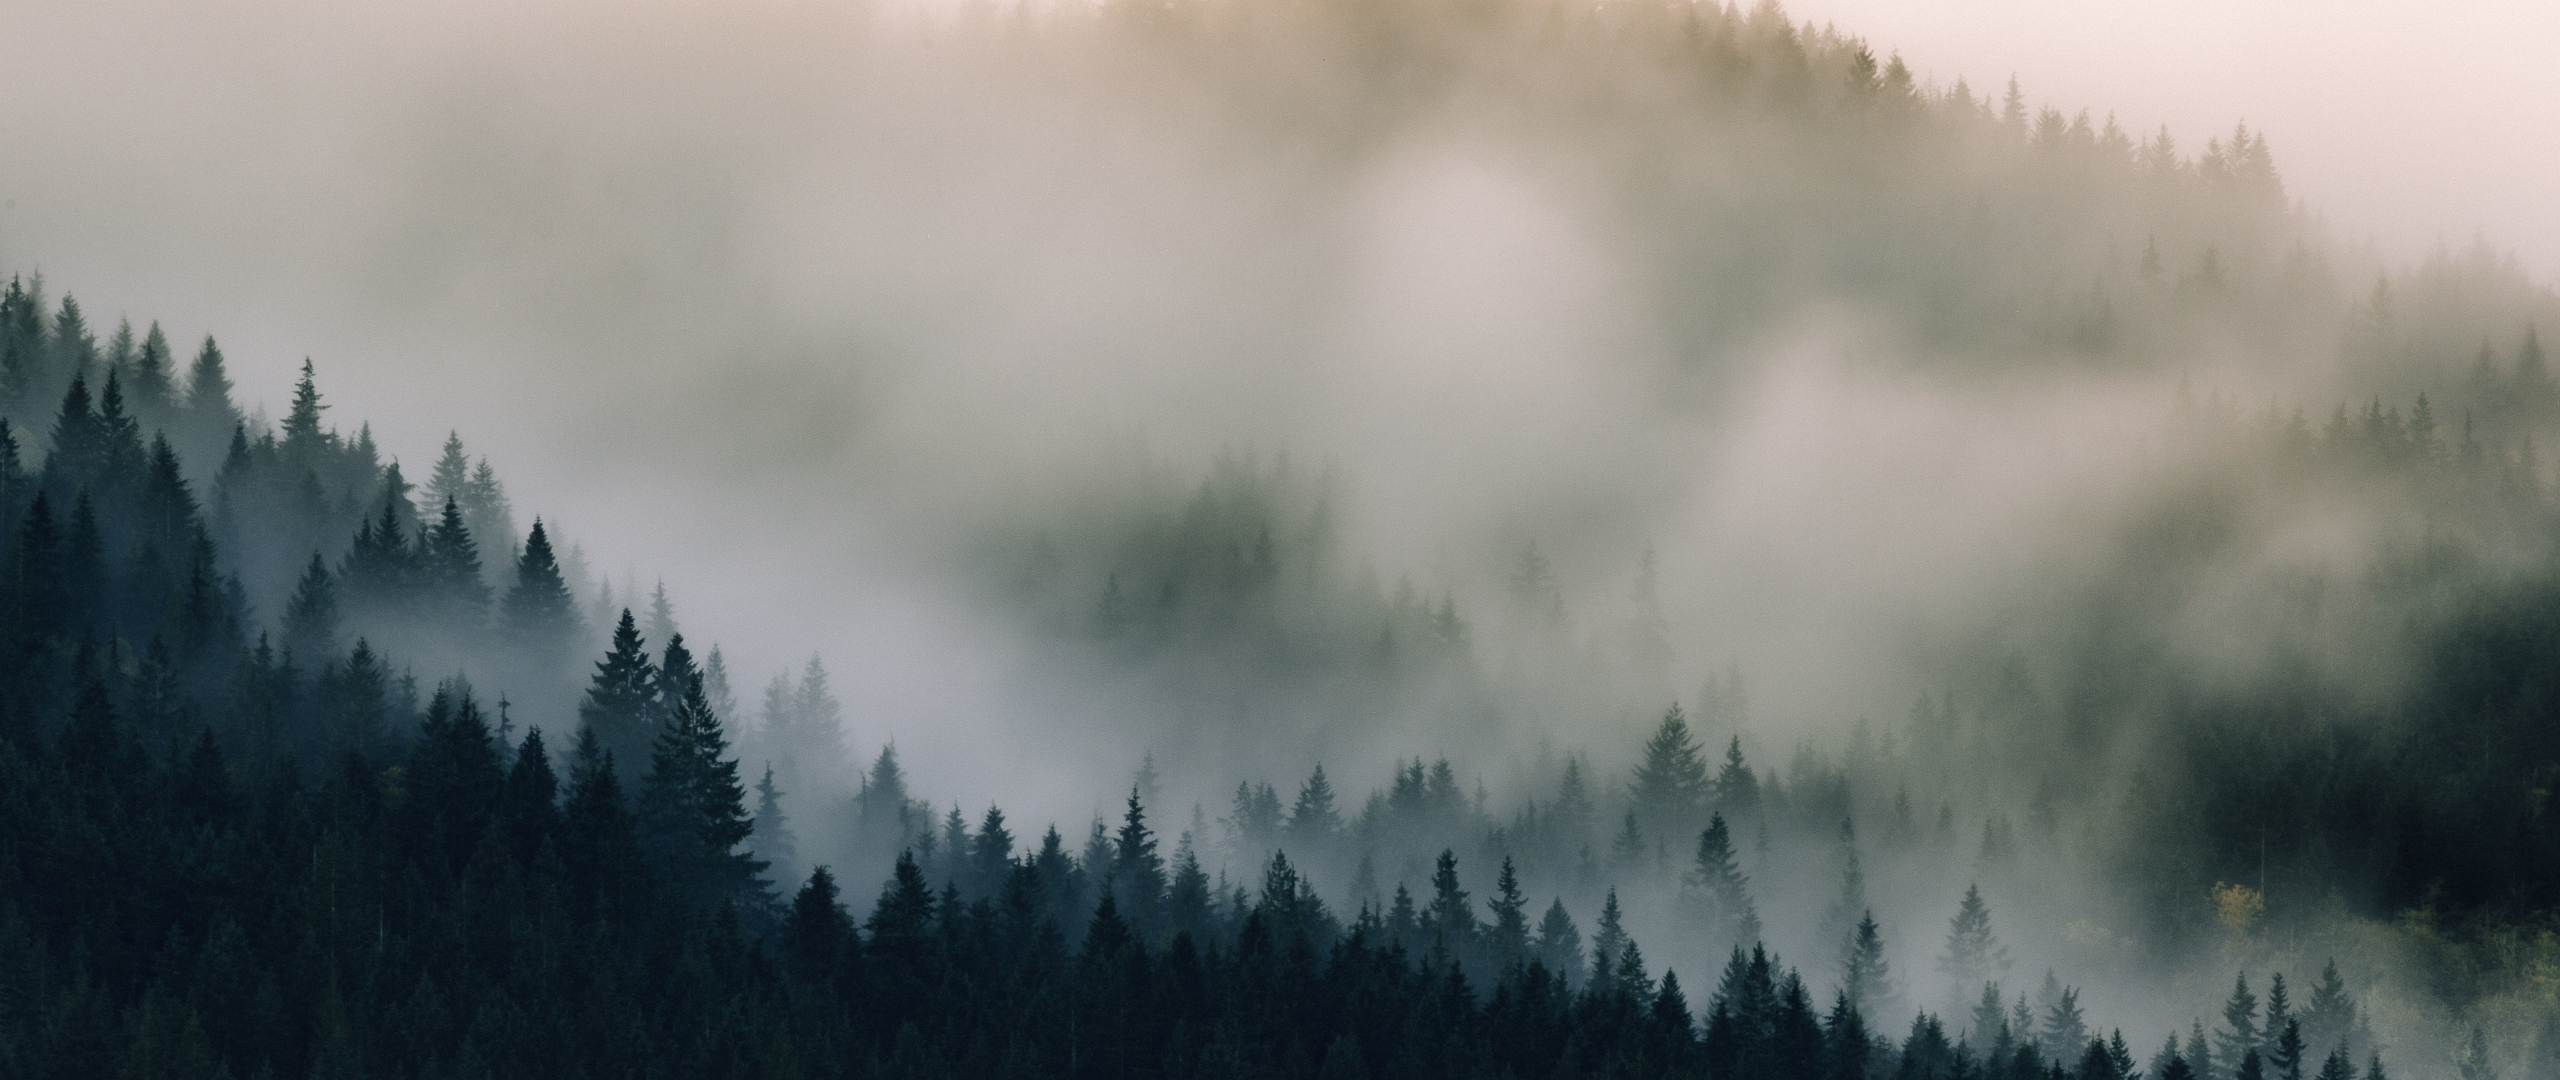 Download 2560x1080 wallpaper mist, fog, pine trees, nature, dual wide ...